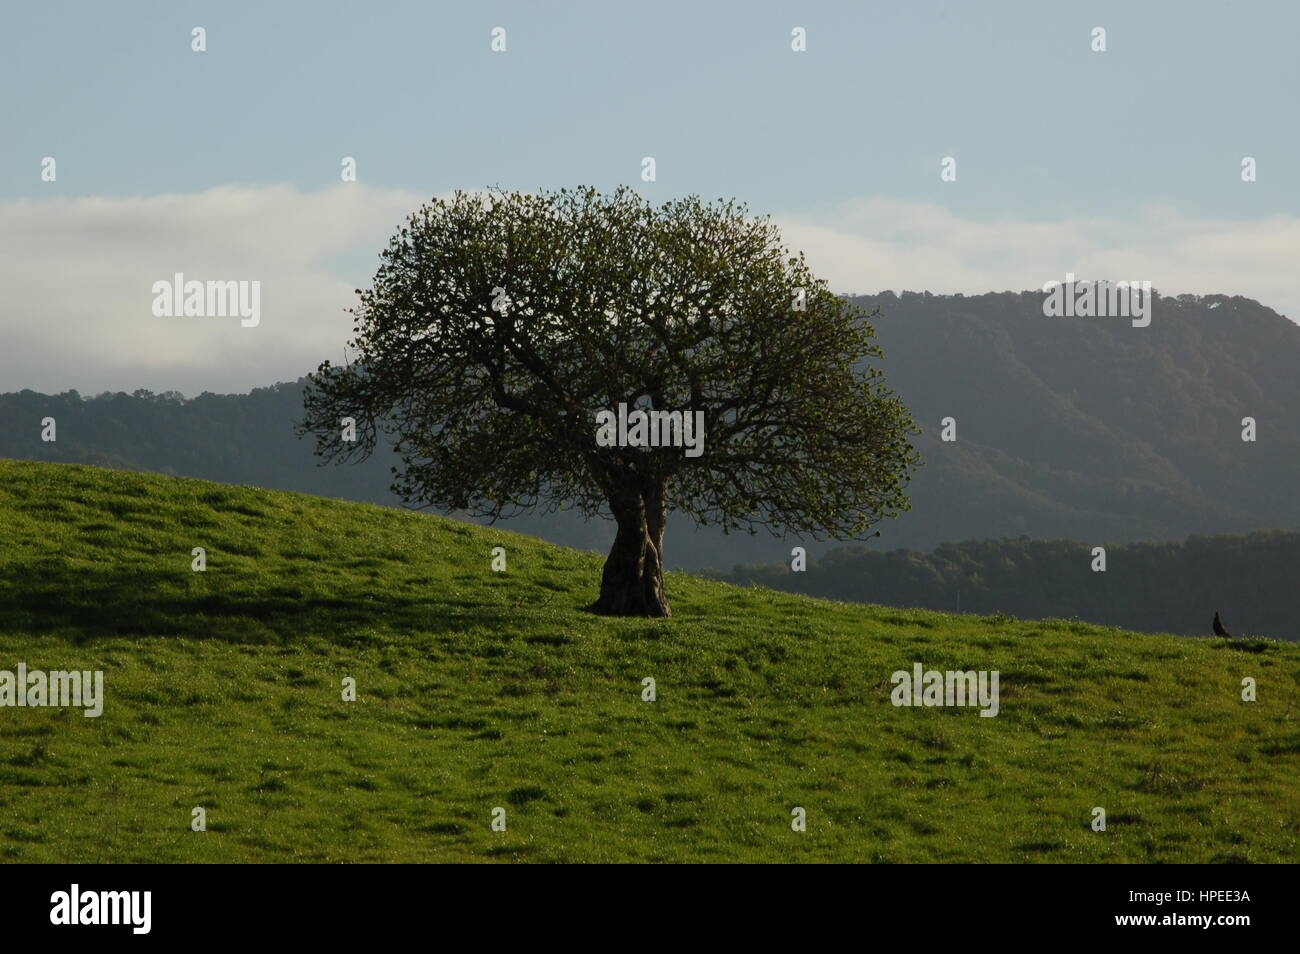 A California Buckeye tree standing all by its lonesome in a green field on Deer Island near San Rafael, CA. Taken February 2017. Stock Photo